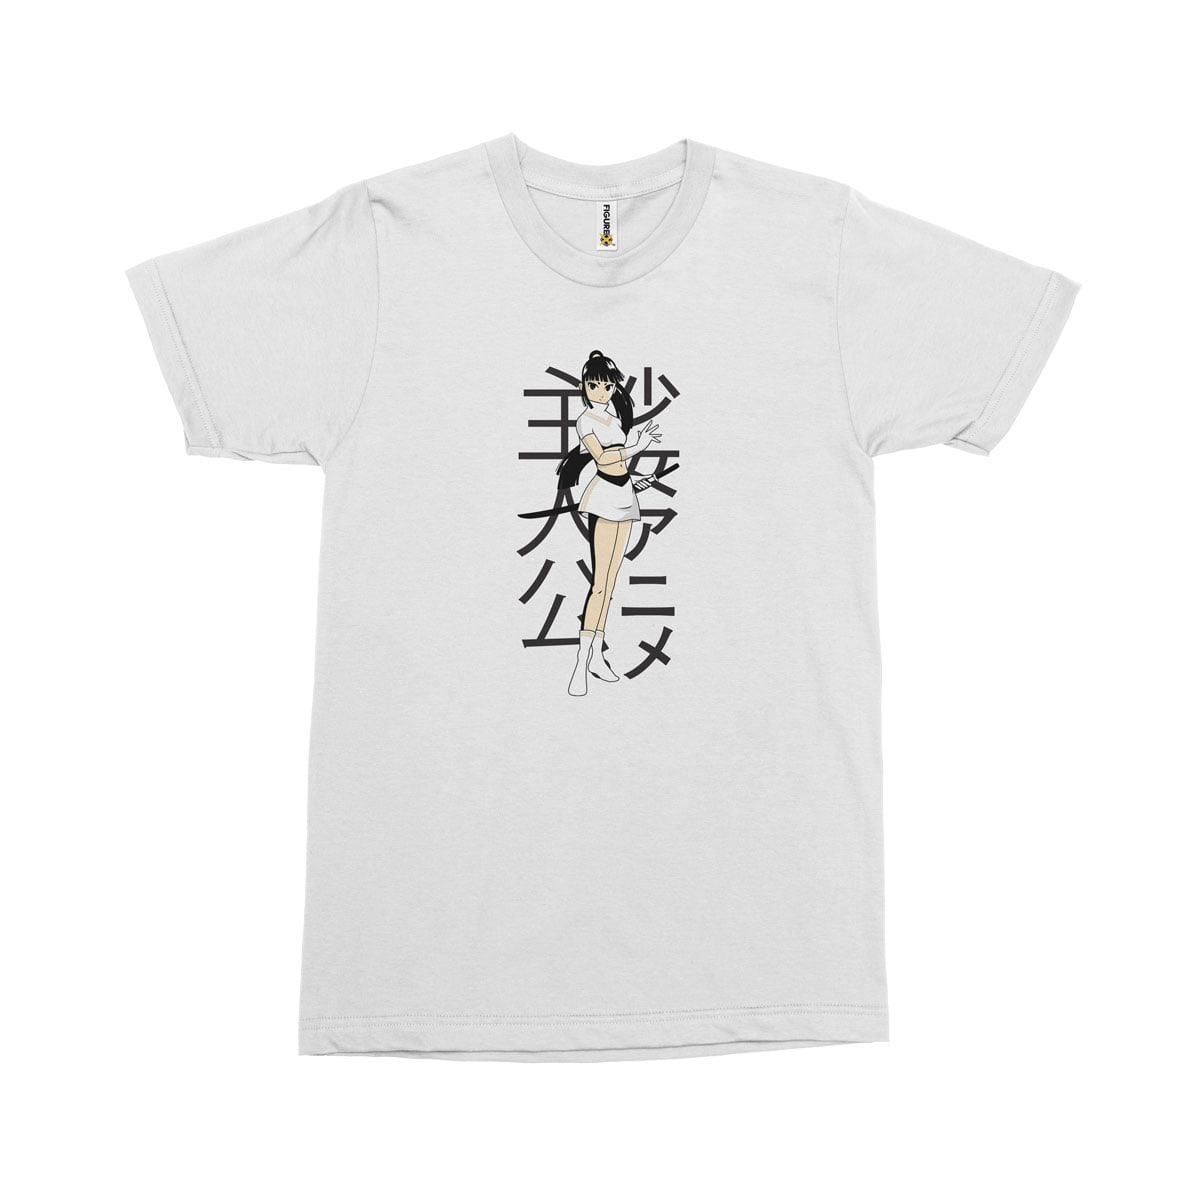 Anime sokakta no8 ecchi samuray tisort b - ecchi samuray girl - anime sokaklar 08 baskılı erkek t-shirt - figurex